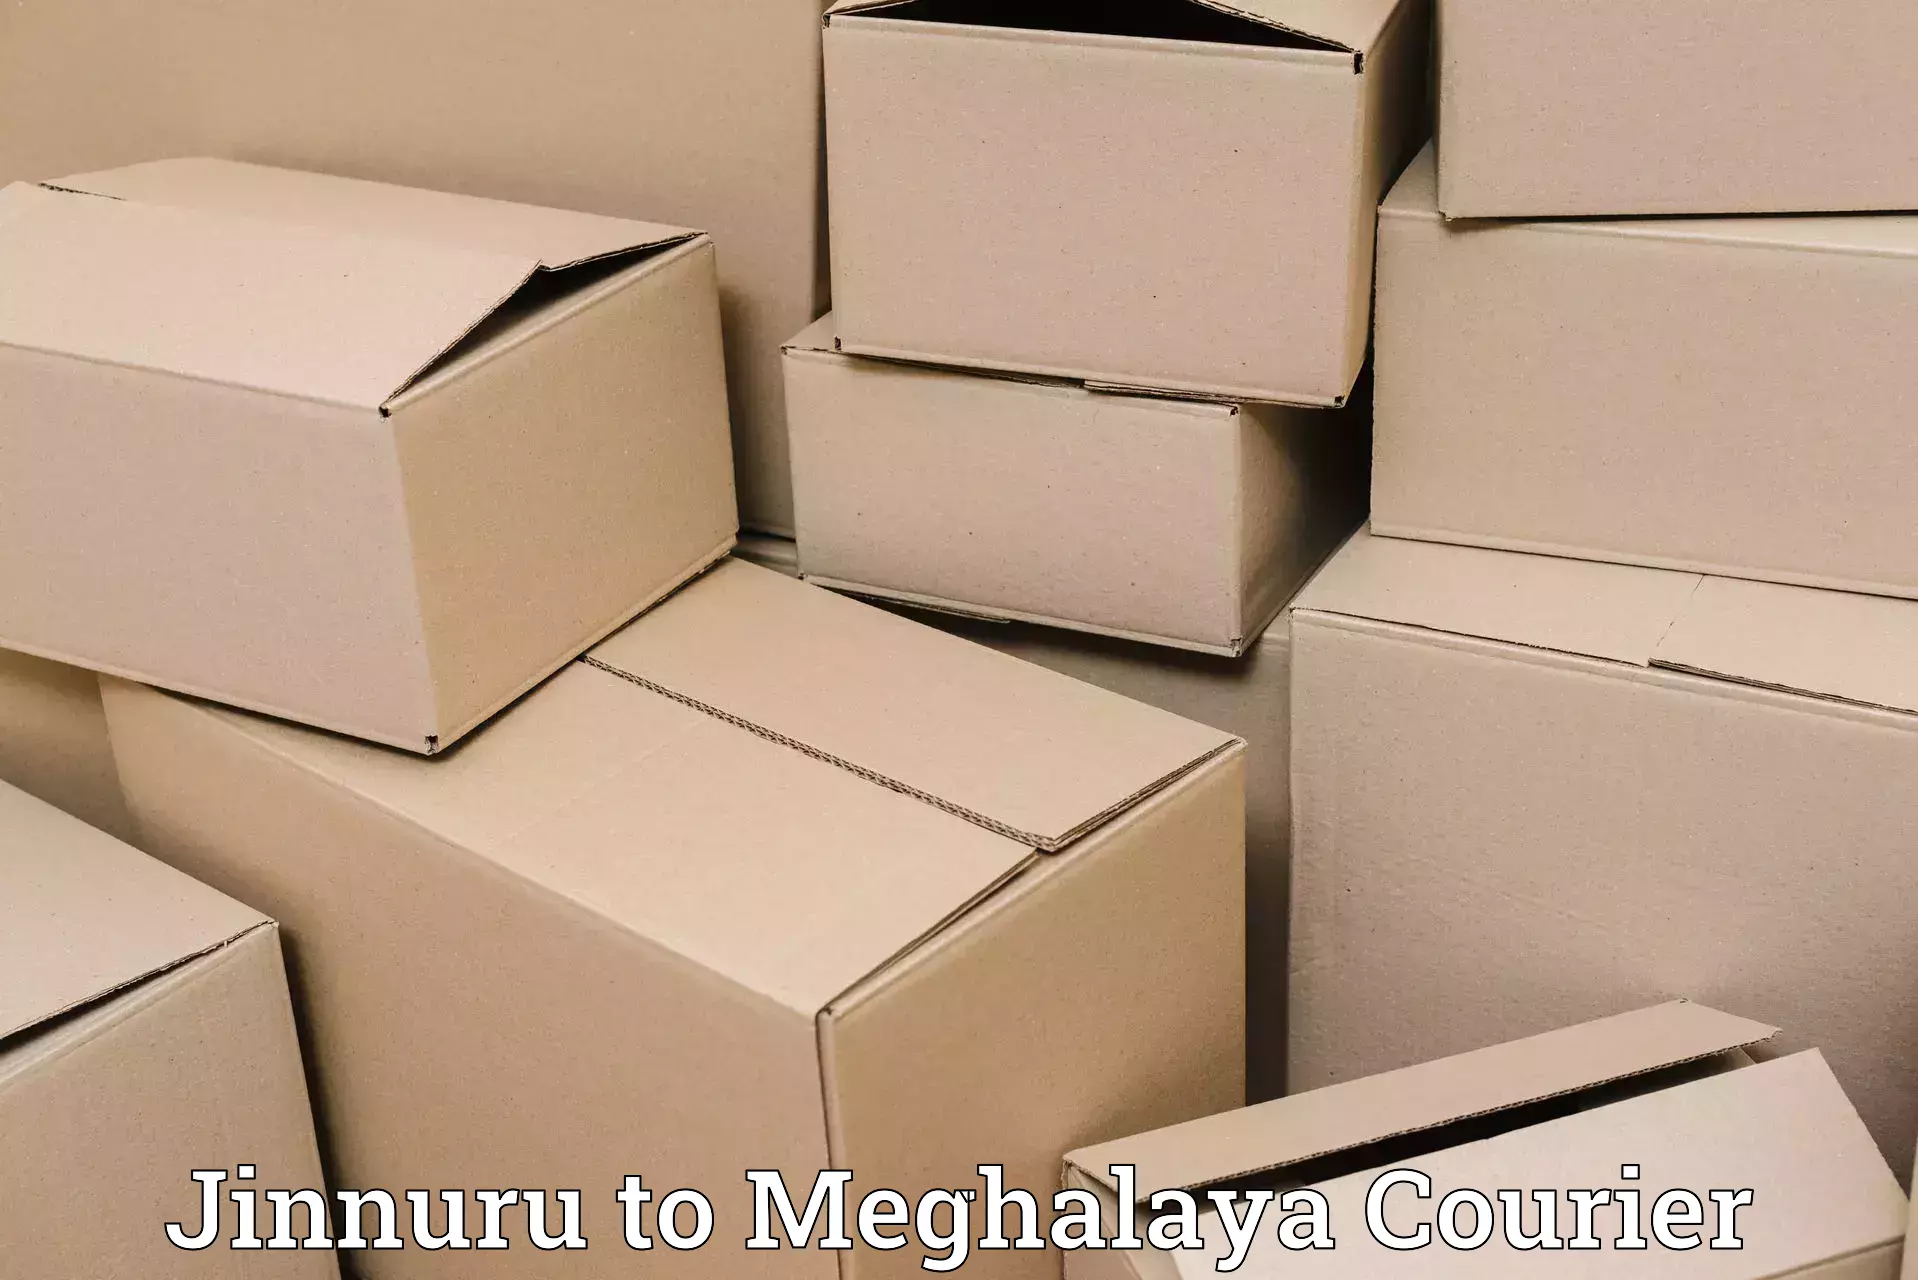 Seamless shipping experience Jinnuru to Meghalaya